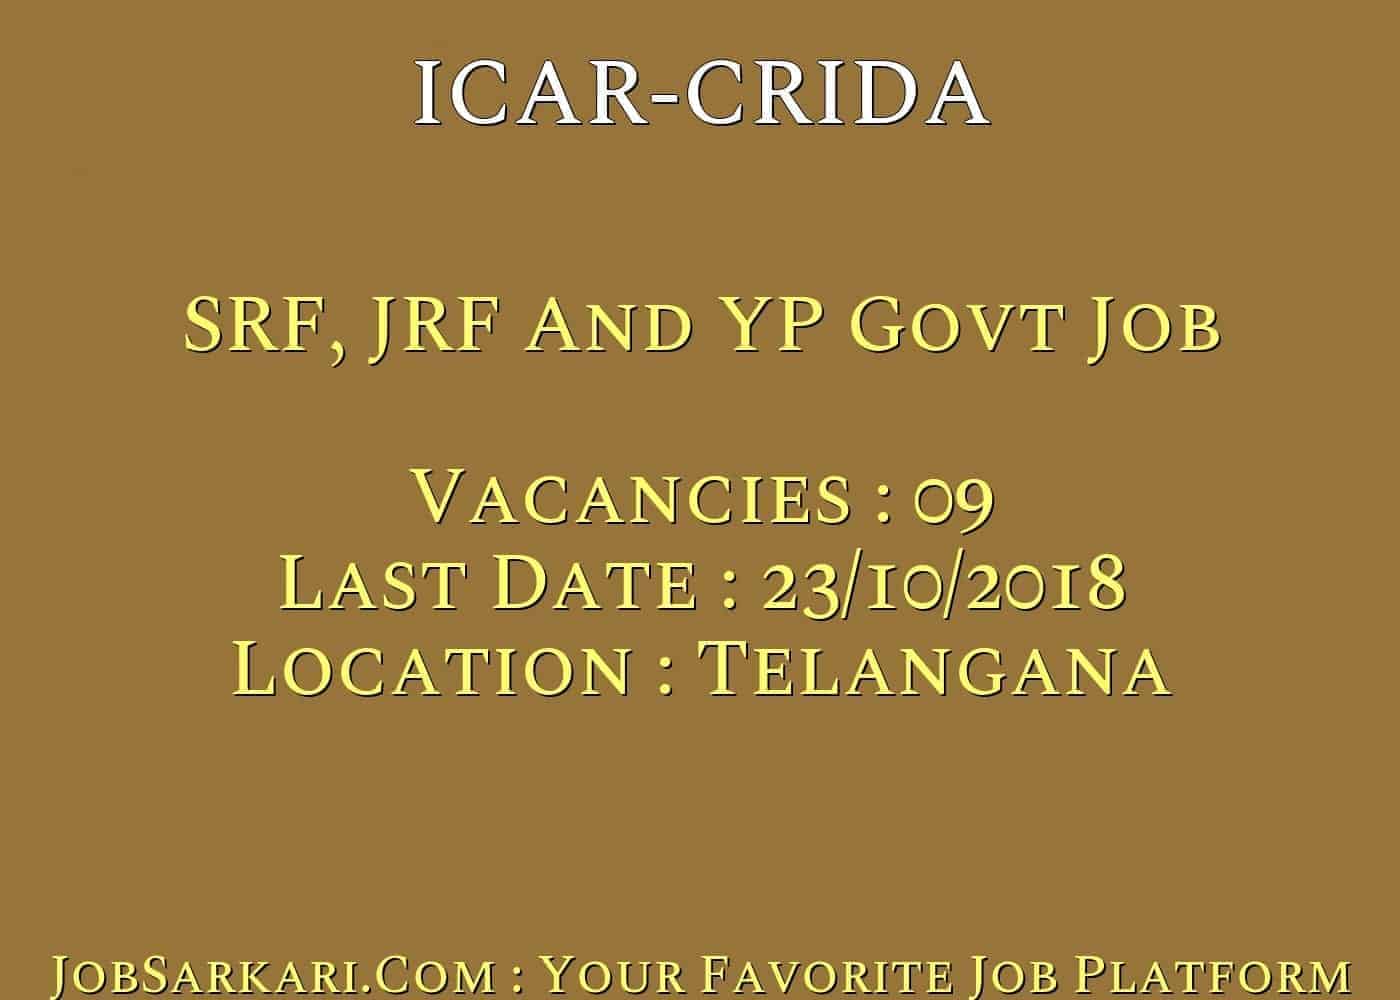 ICAR-CRIDA Recruitment 2018 For SRF, JRF And YP Govt Job